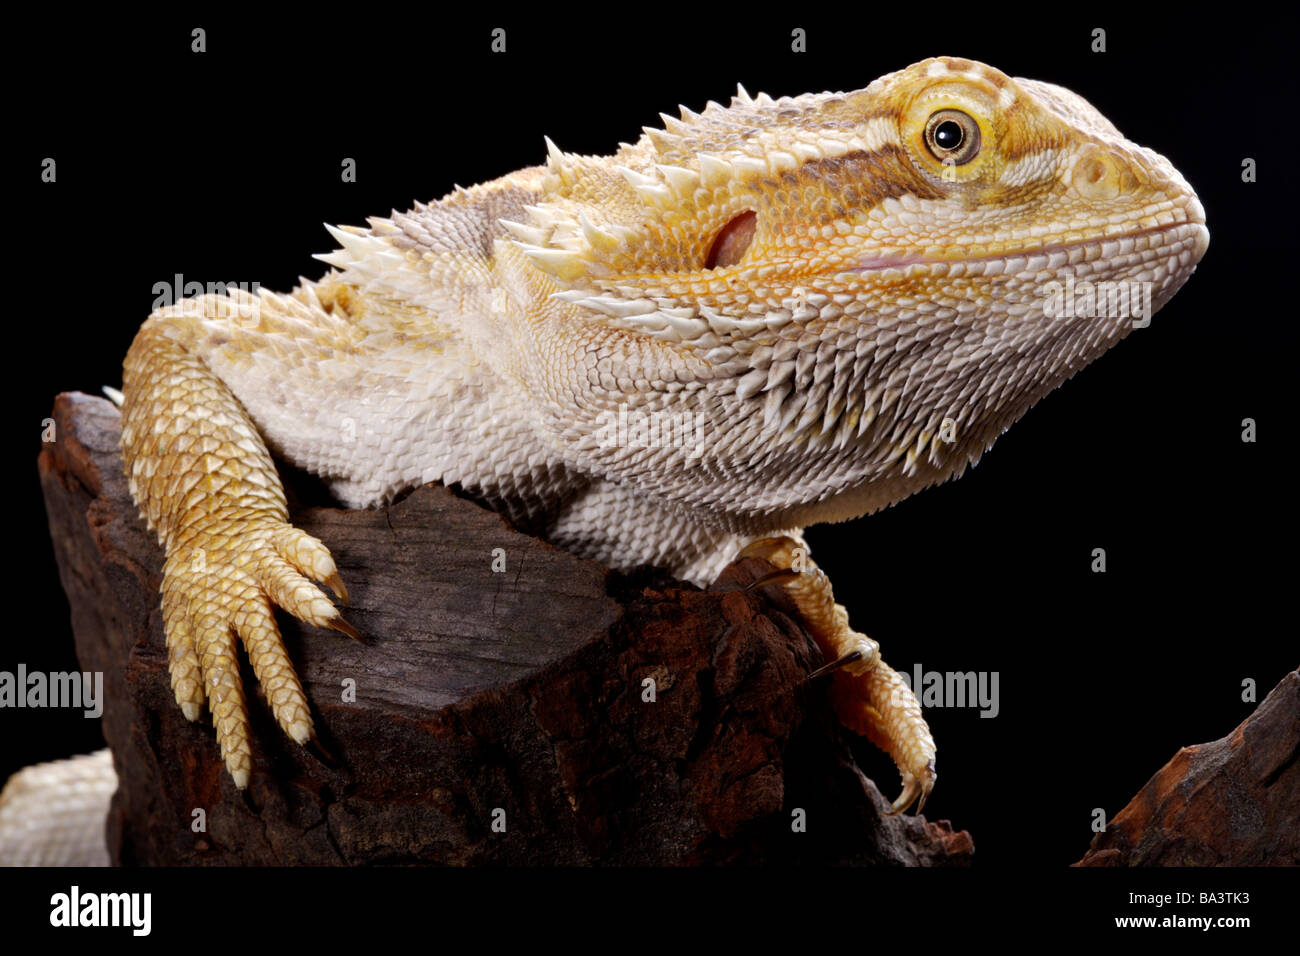 Lizard Pogona Barbata sur moignon close up Banque D'Images